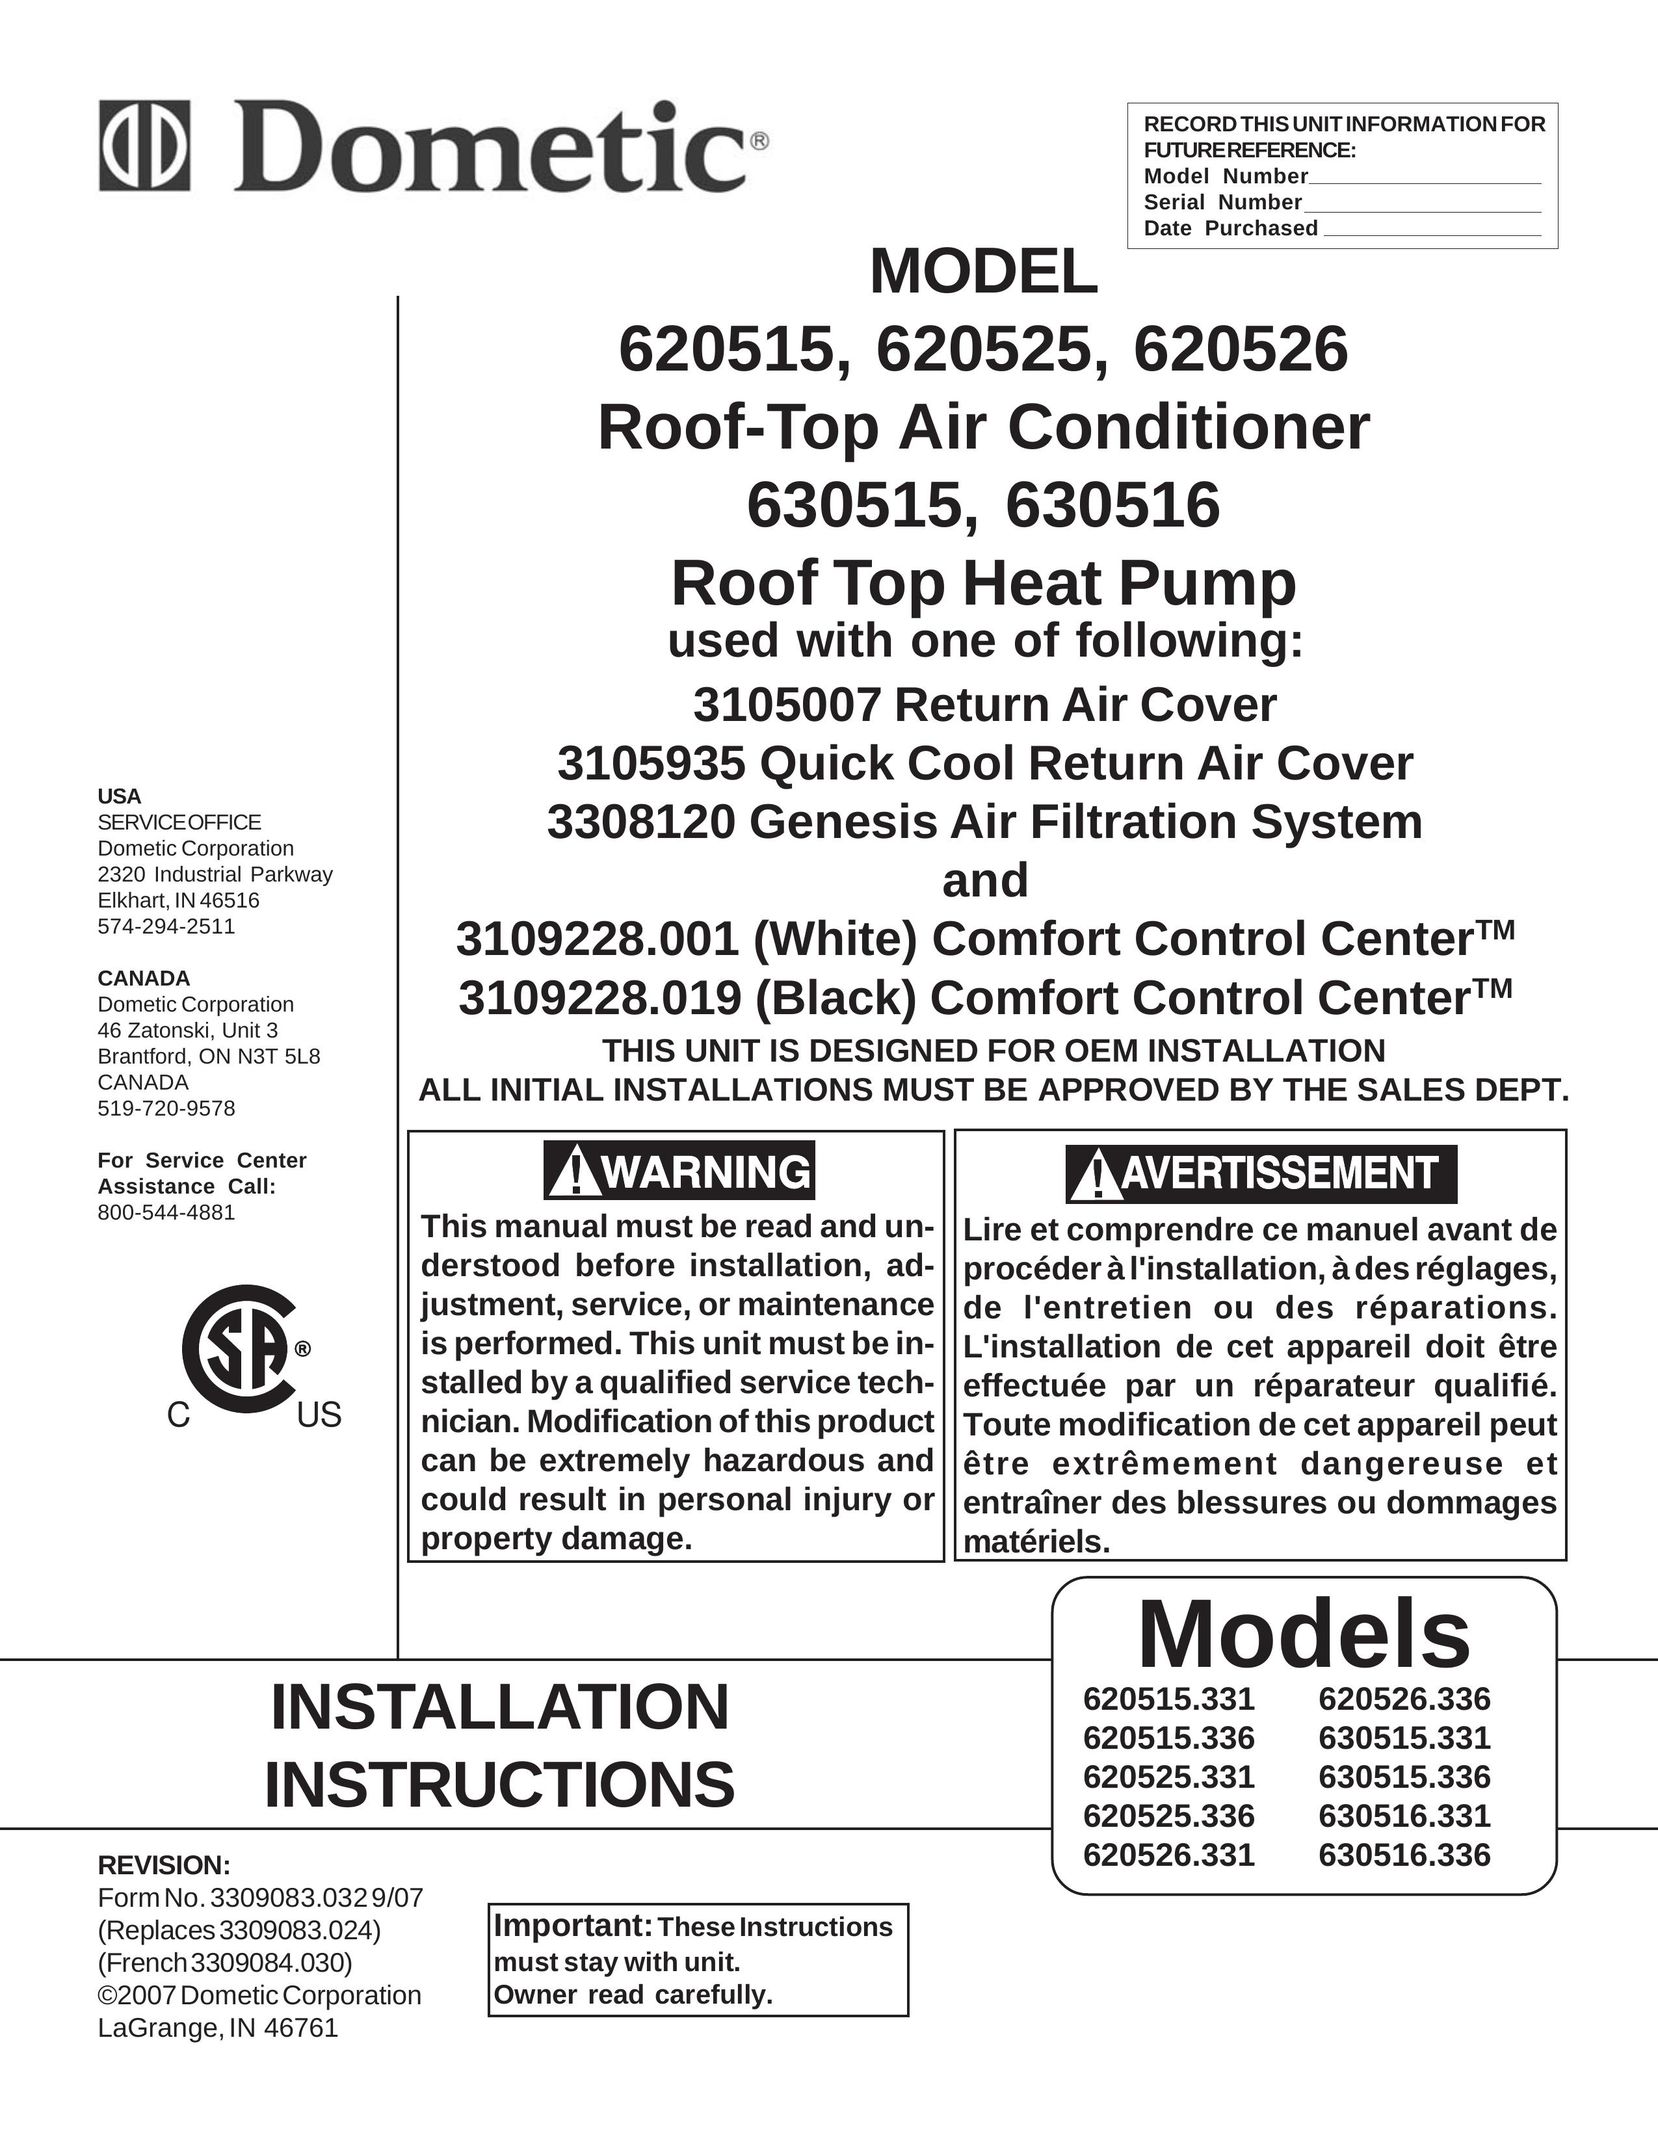 Dometic 620525.331 Air Conditioner User Manual